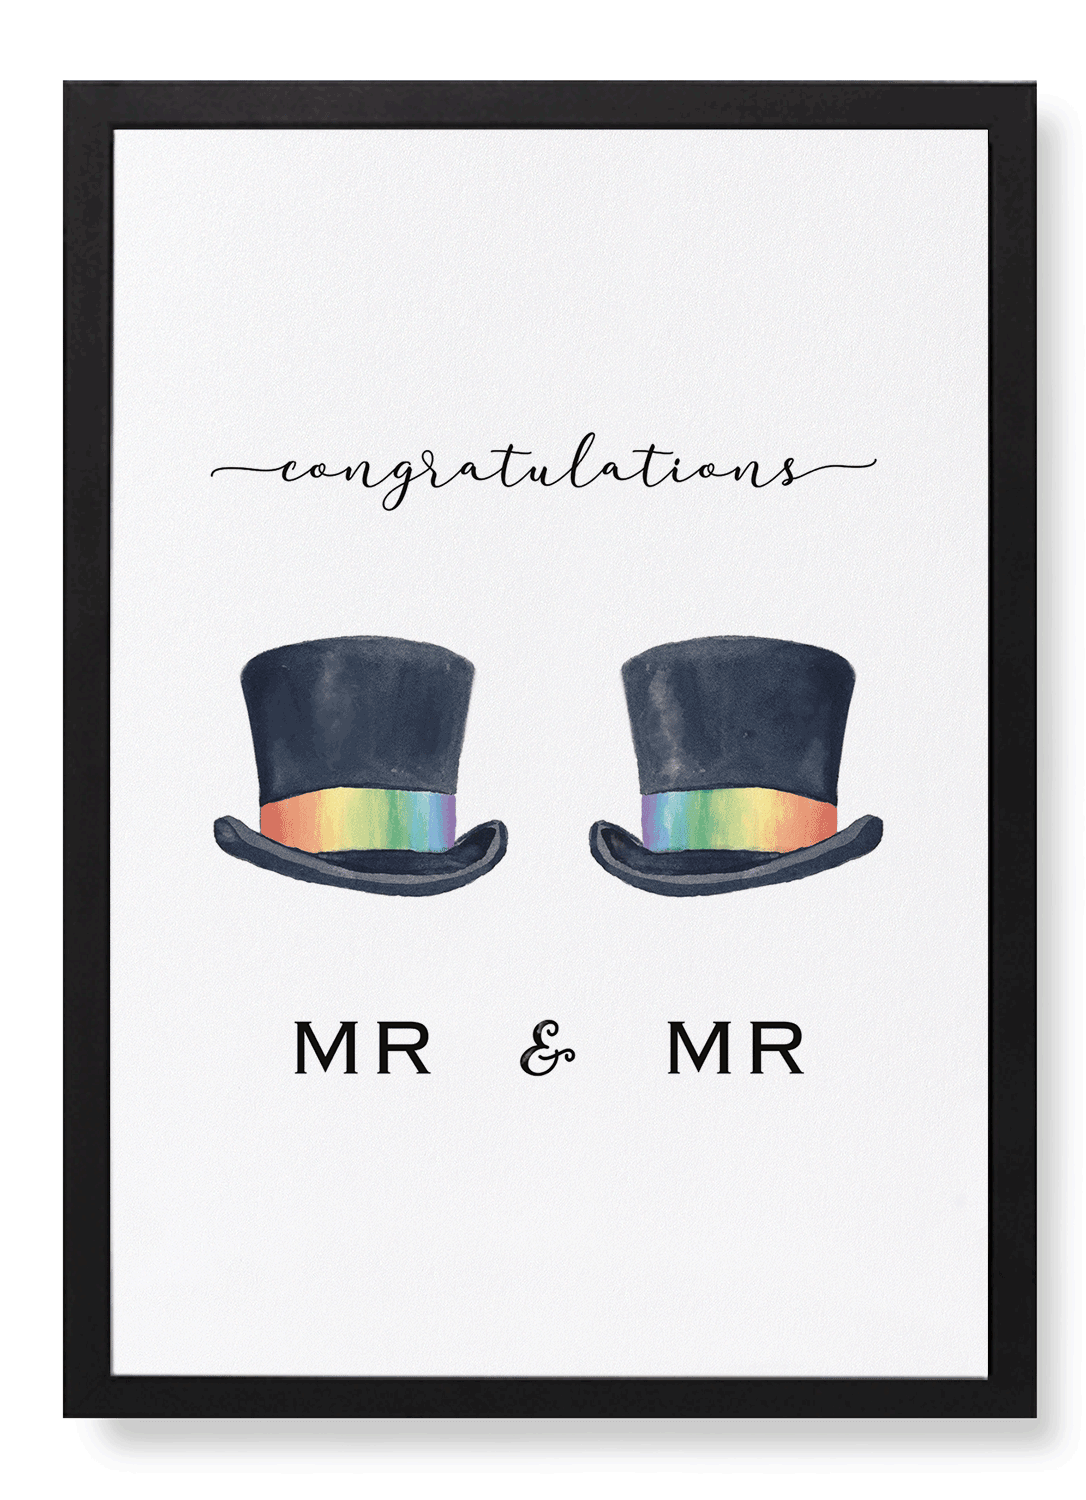 MR & MR HATS